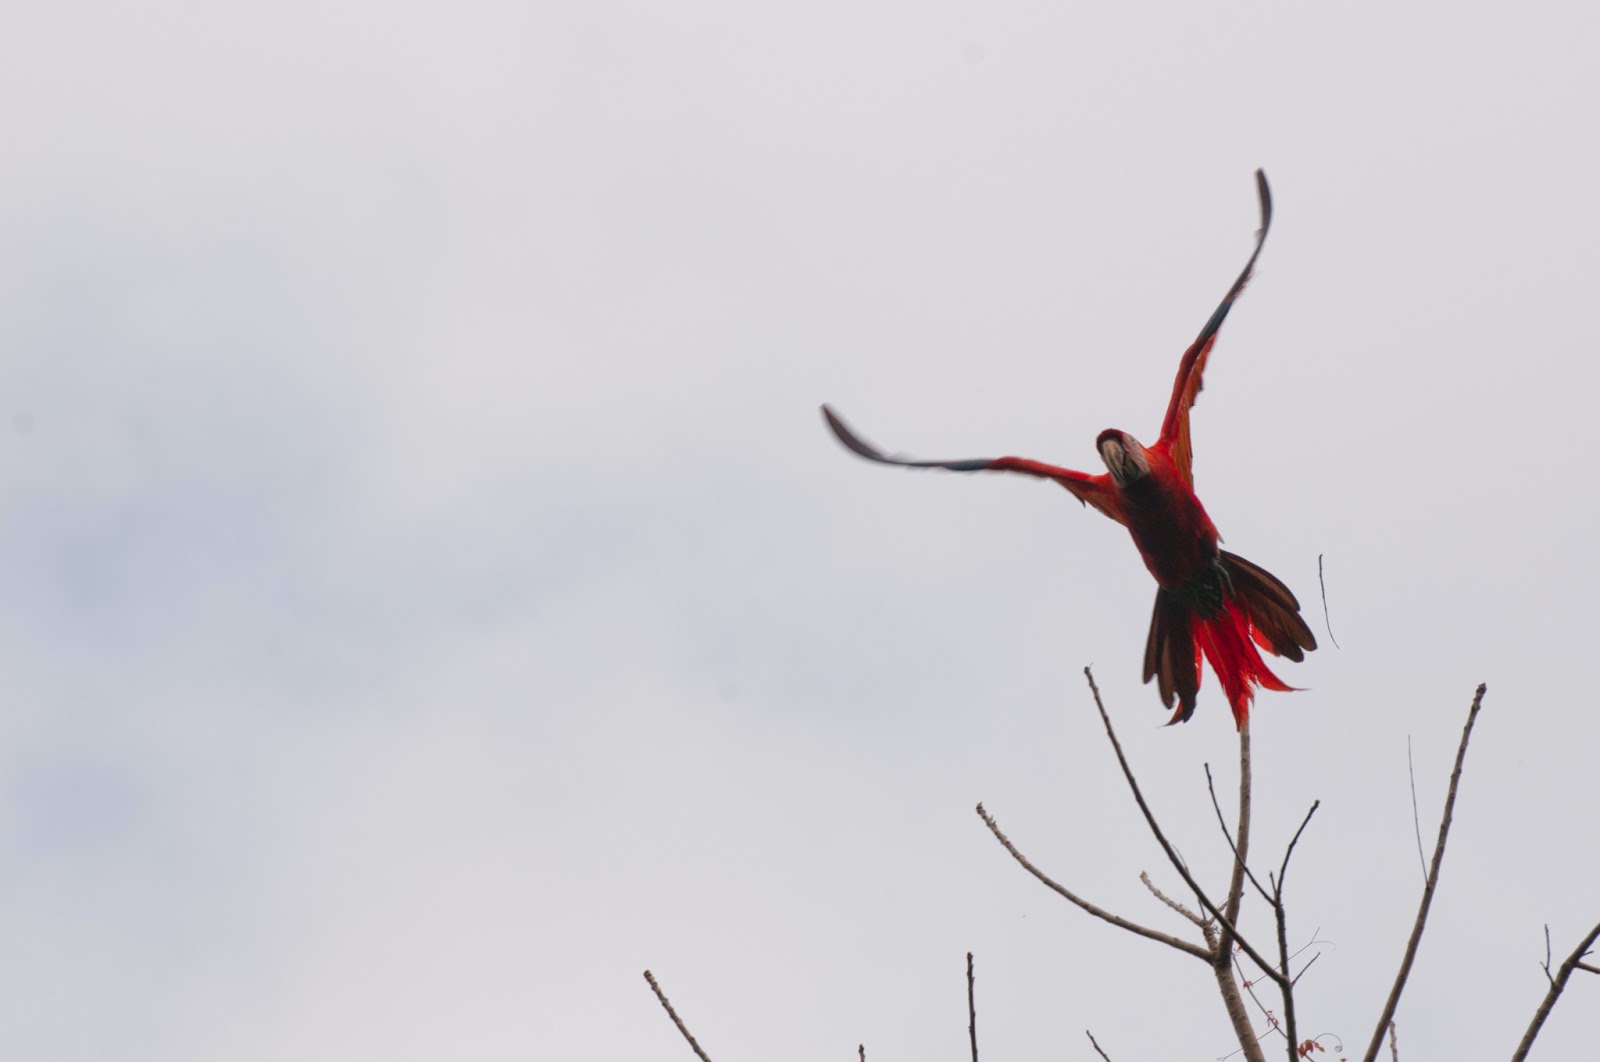 Guacamaya Roja, Ara Macao Cyanoptera, or scarlet macaw